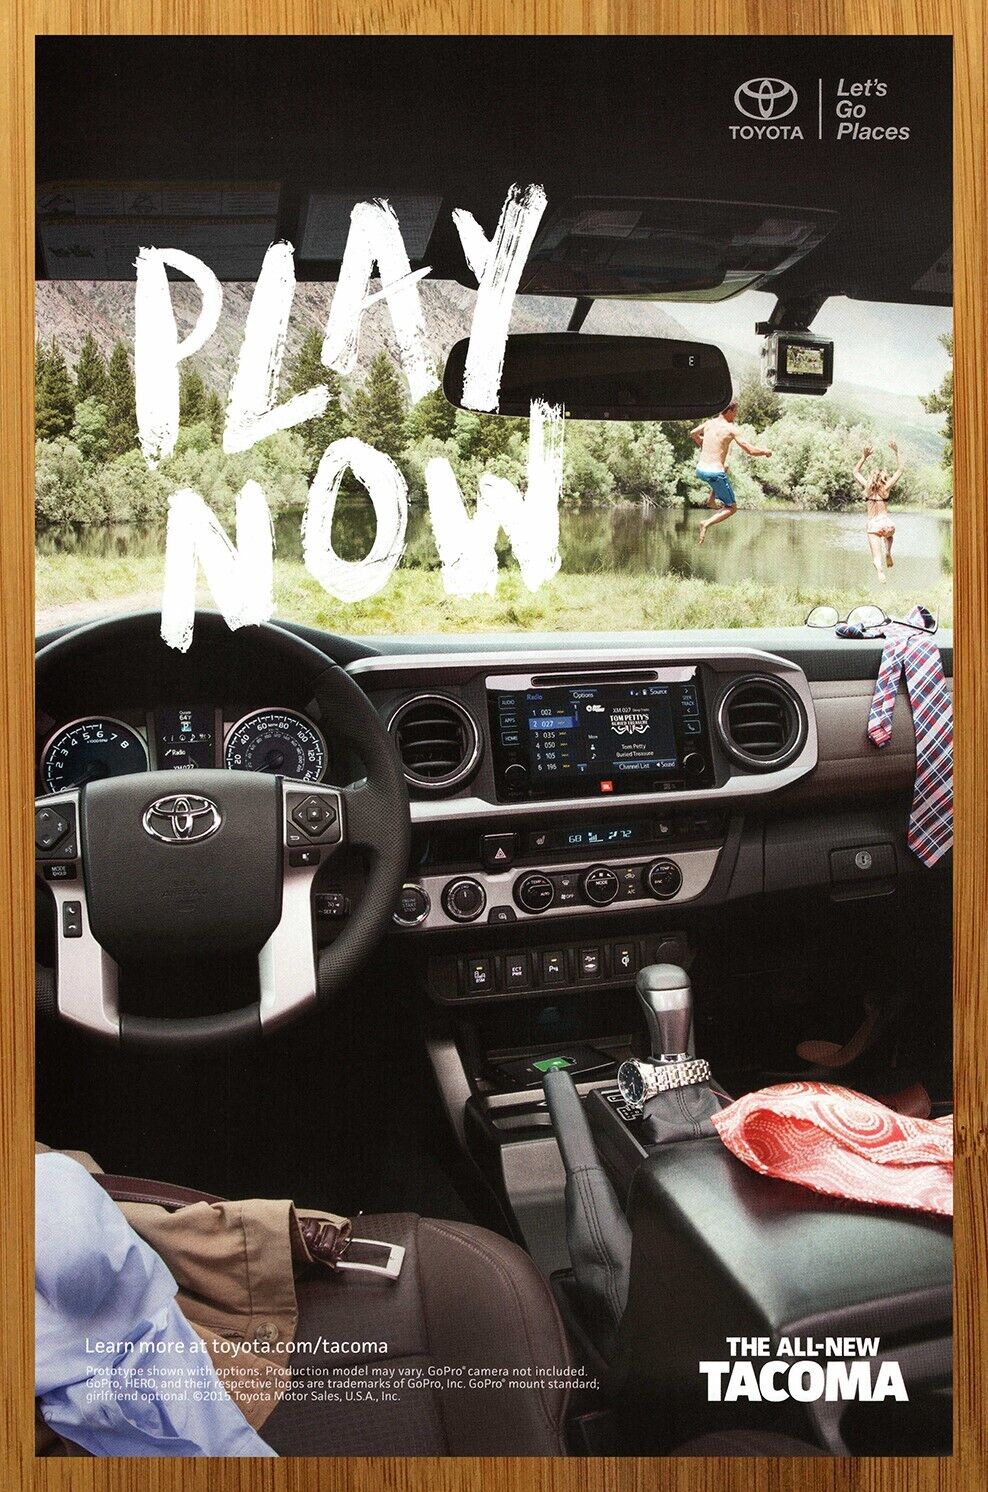 2015 Toyota Tacoma Print Ad/Poster Car Truck Summer Lake Man Cave Wall Pop Art